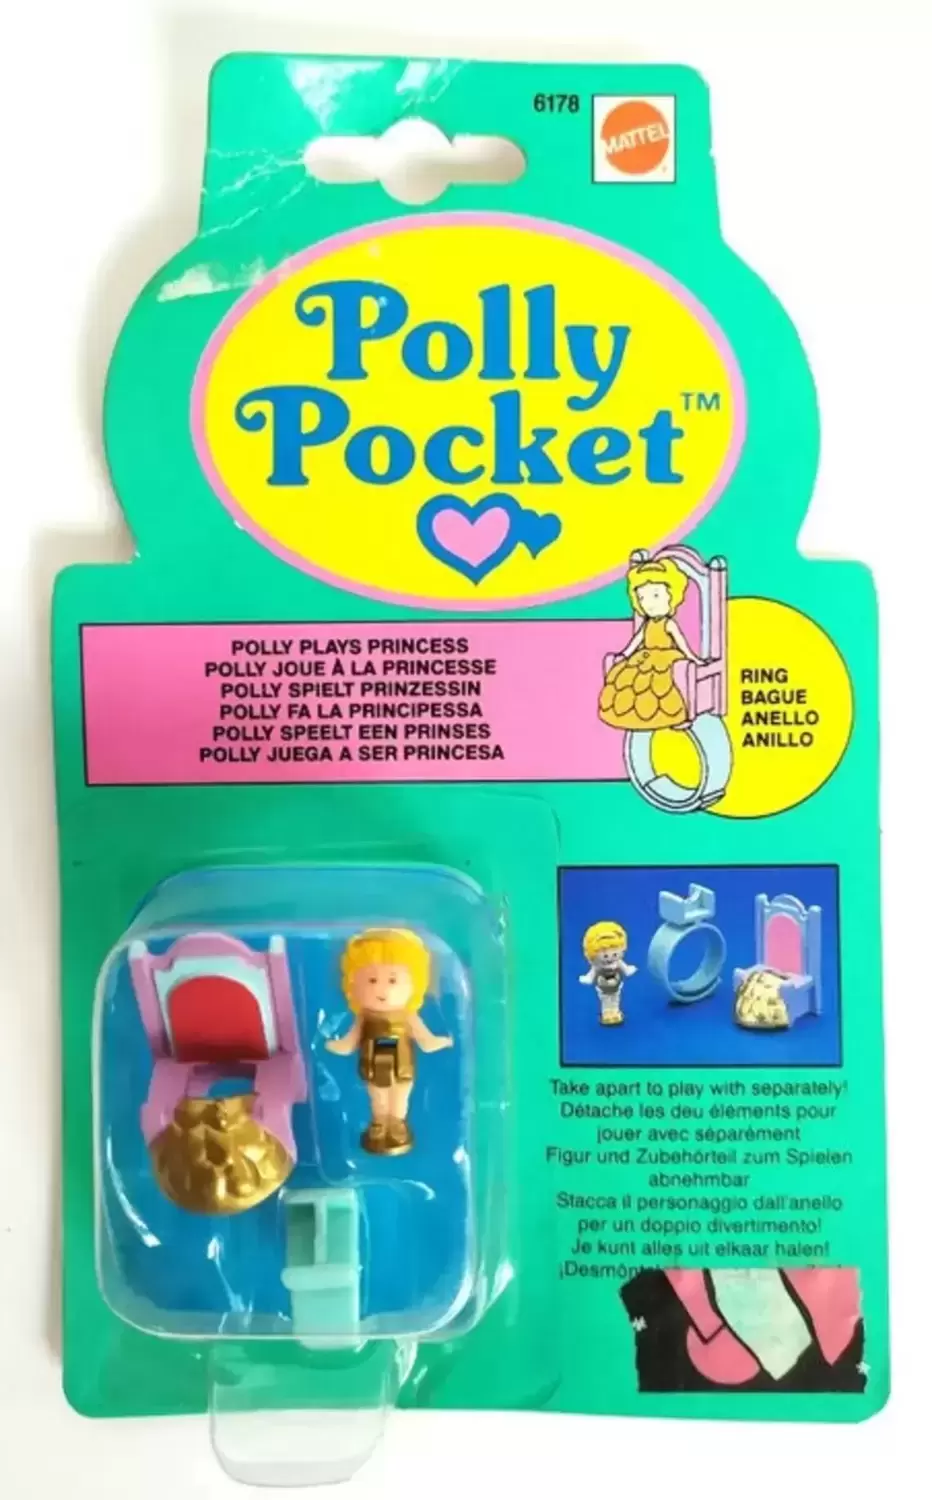 Polly Pocket Bluebird (vintage) - Polly on a throne